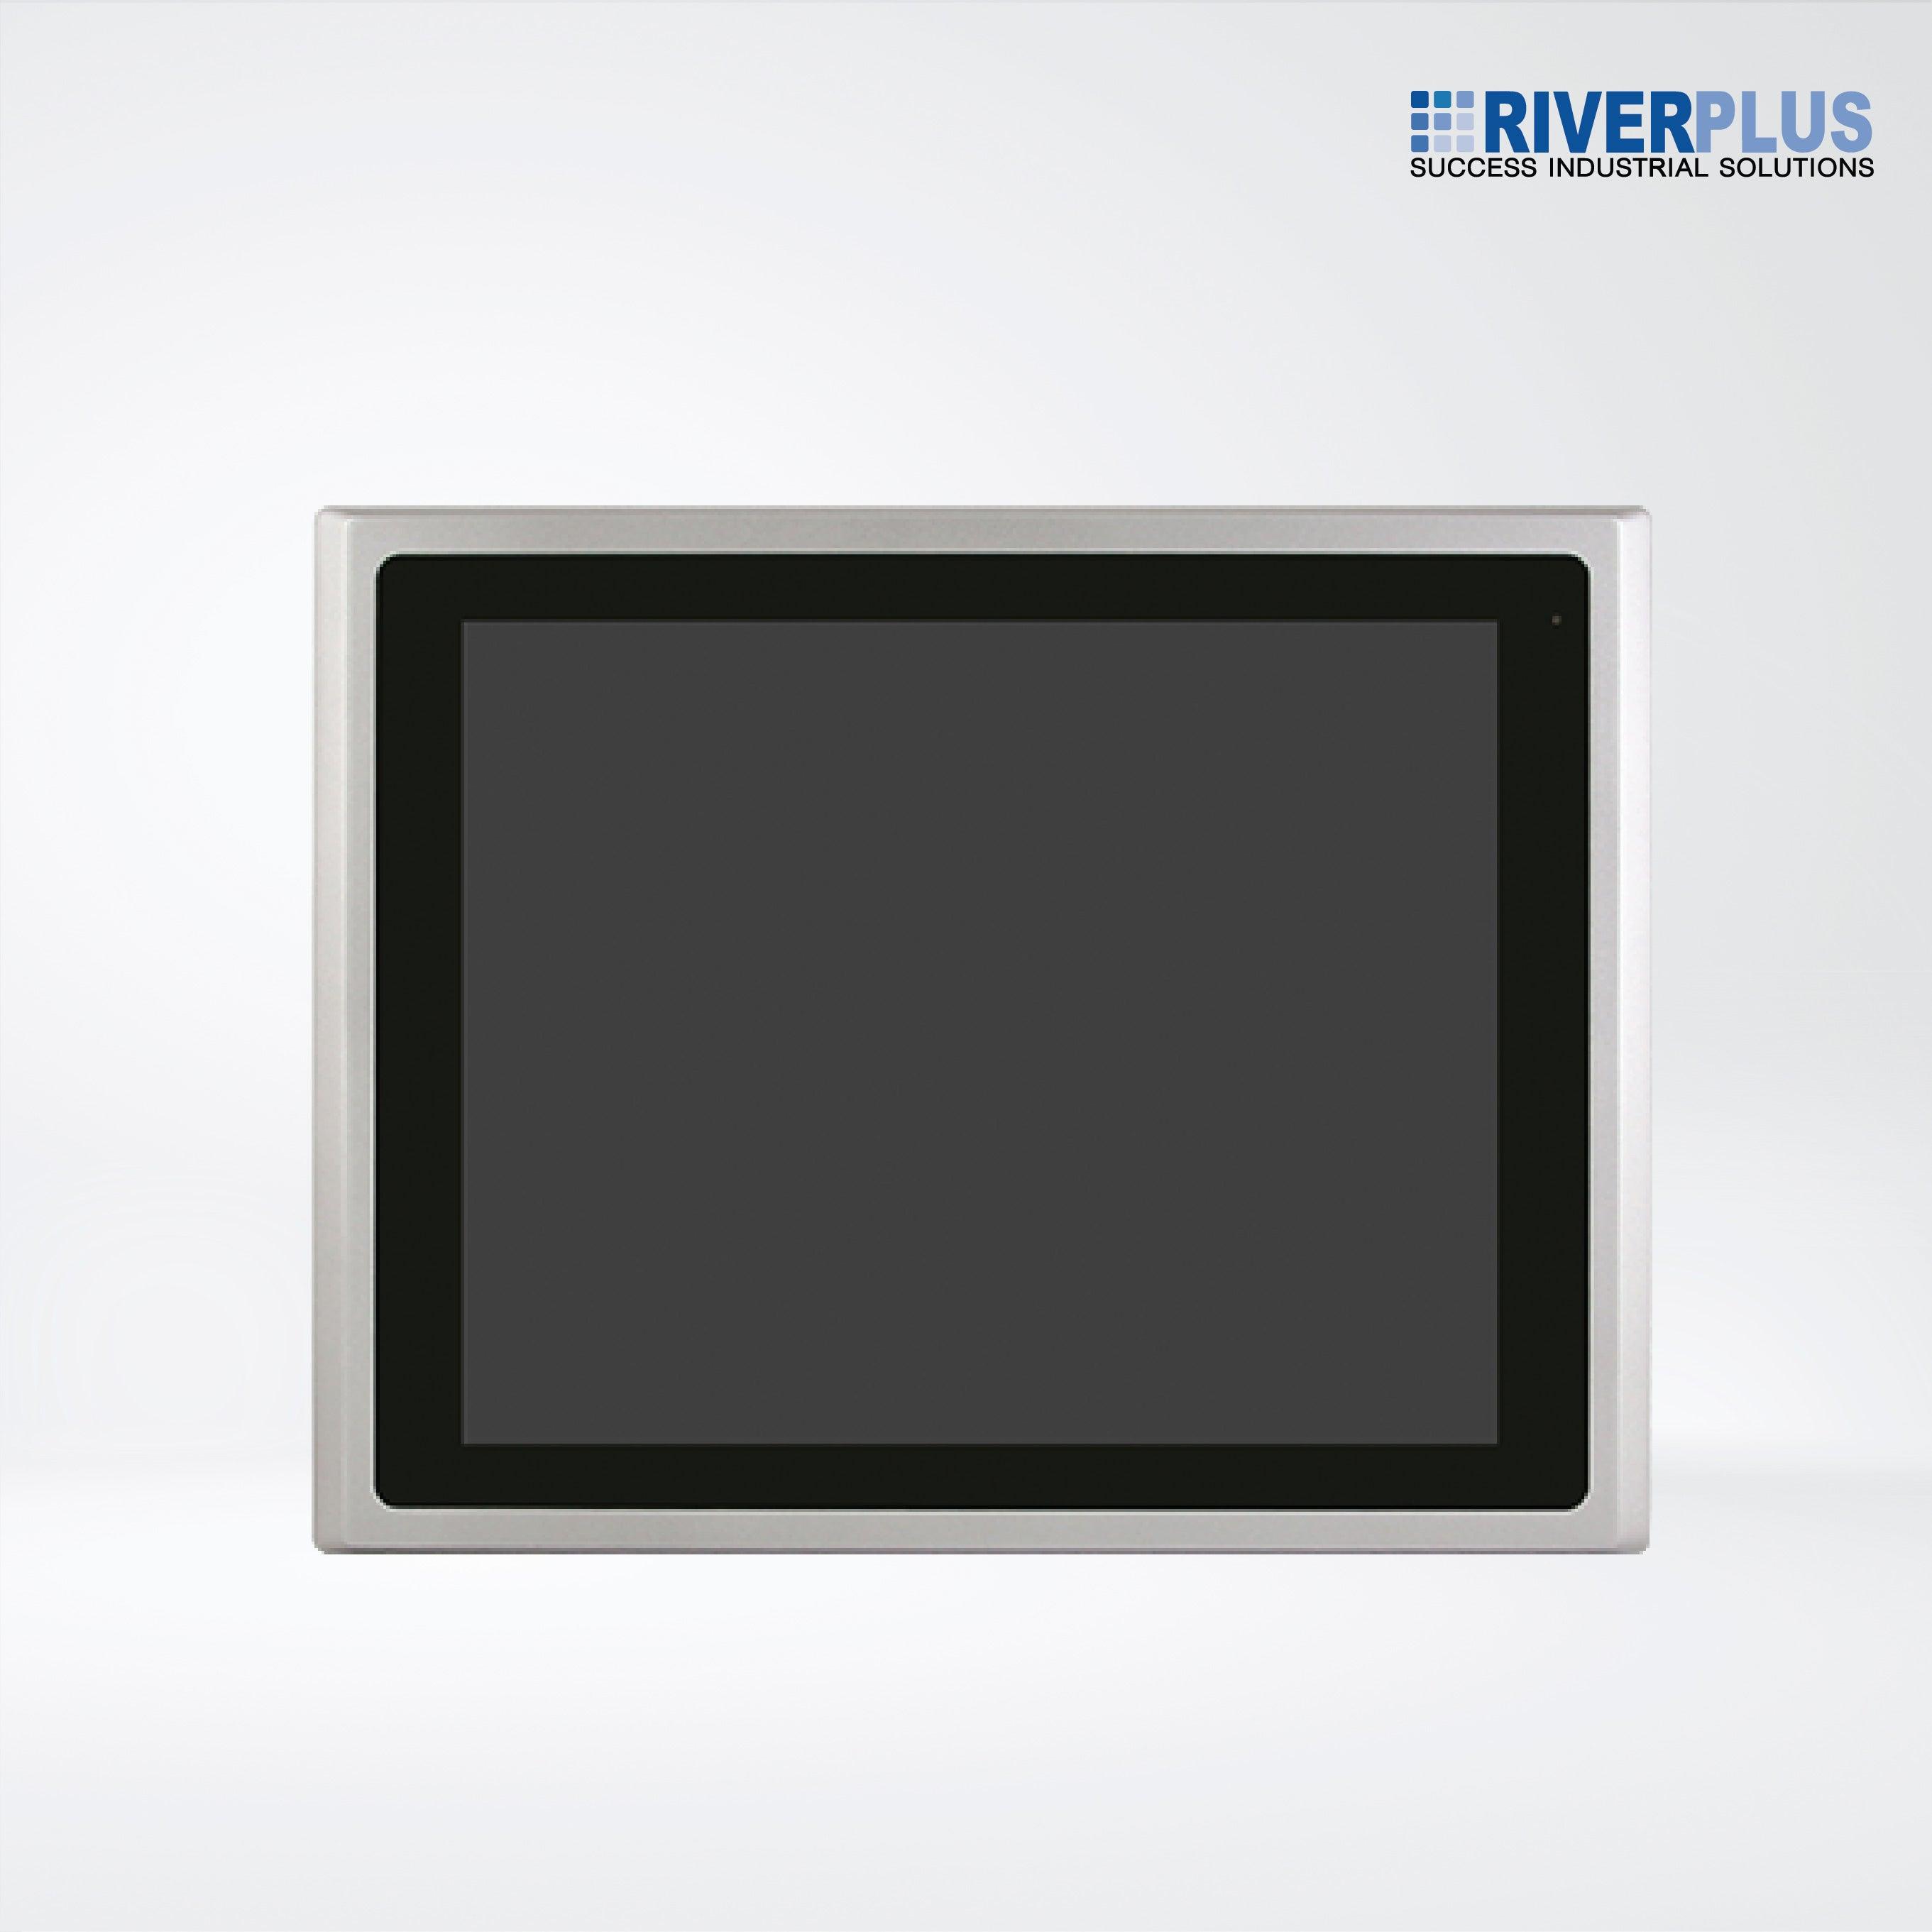 ARCHMI-817ARH 17" Intel Apollo Lake N4200/N3350 Fanless Industrial Compact Size Panel PC - Riverplus